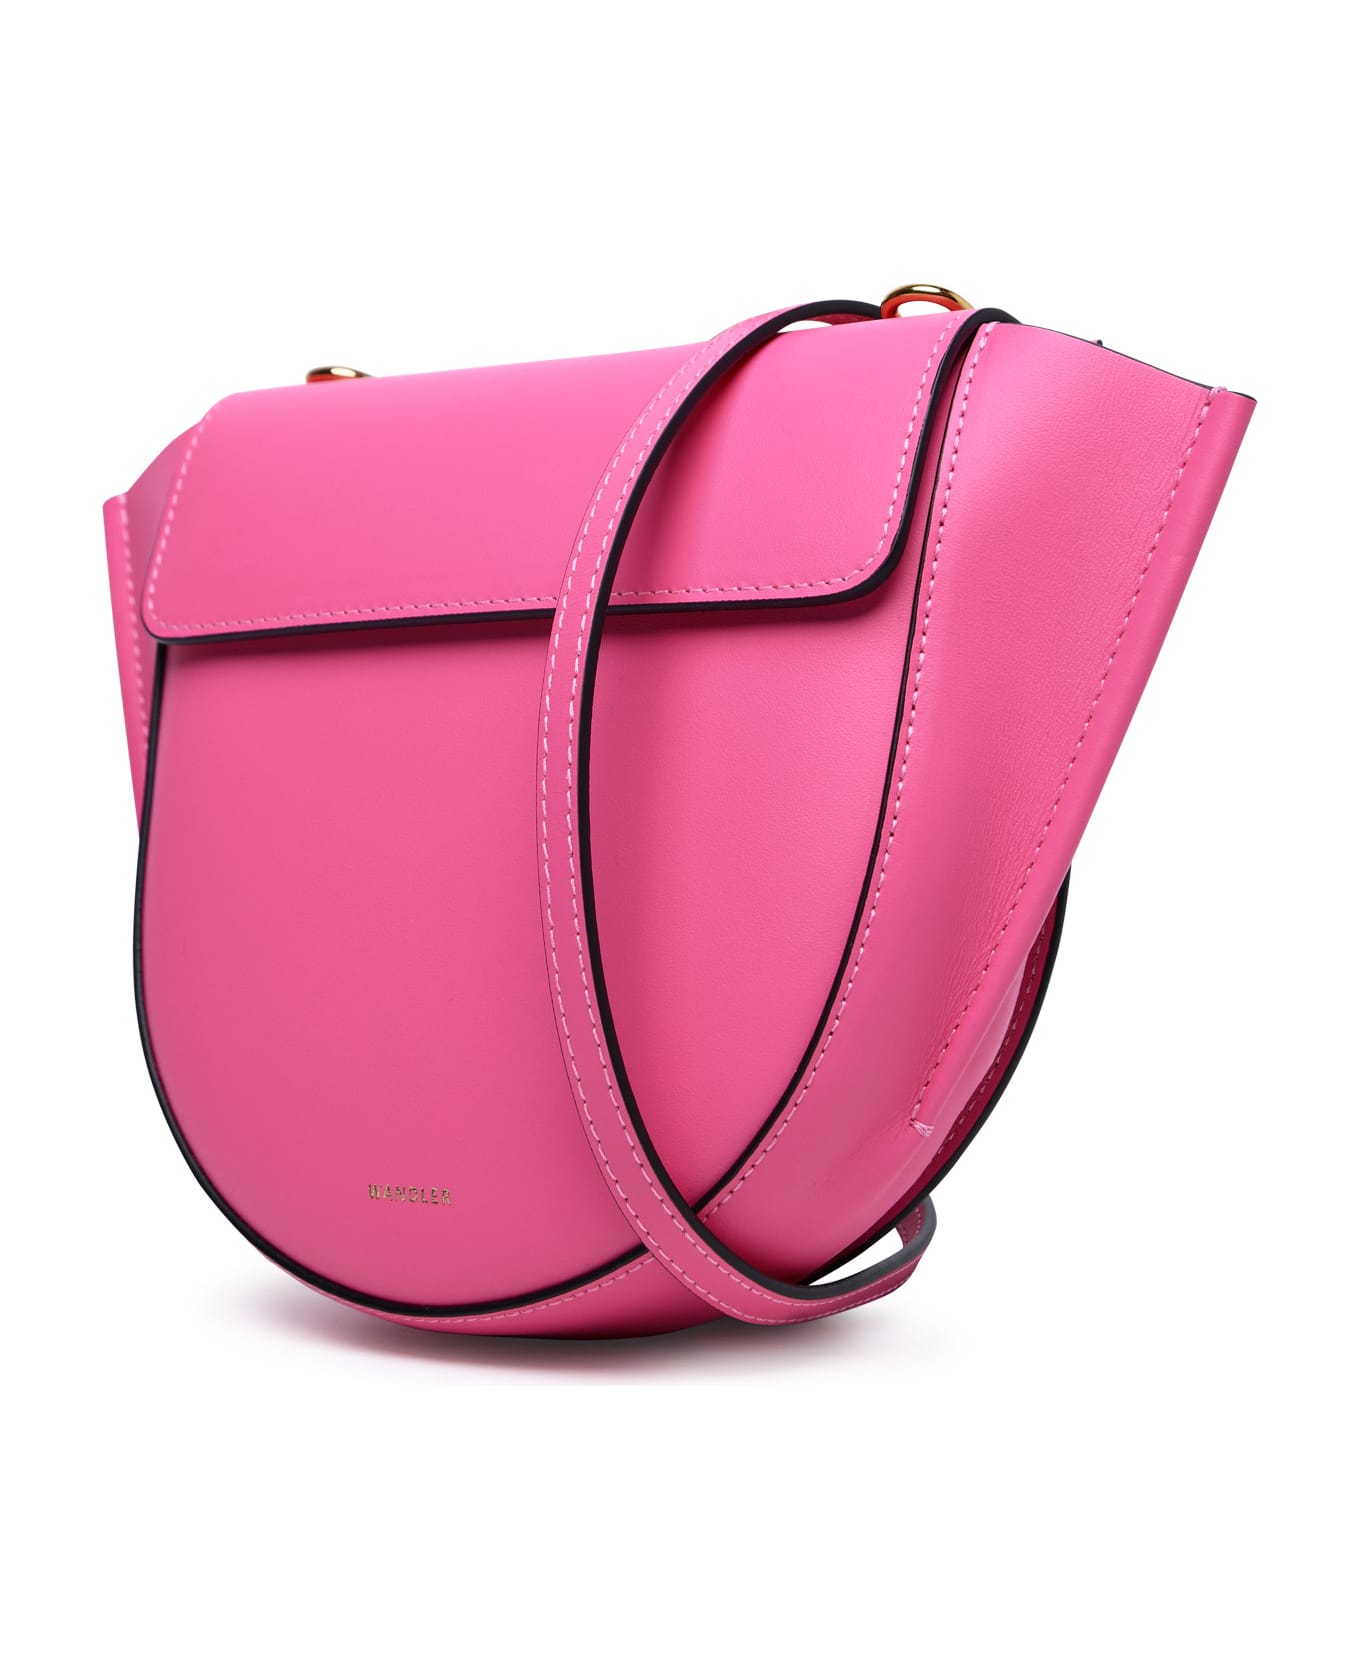 Wandler 'hortensia' Mini Bag In Pink Calf Leather - Fuchsia